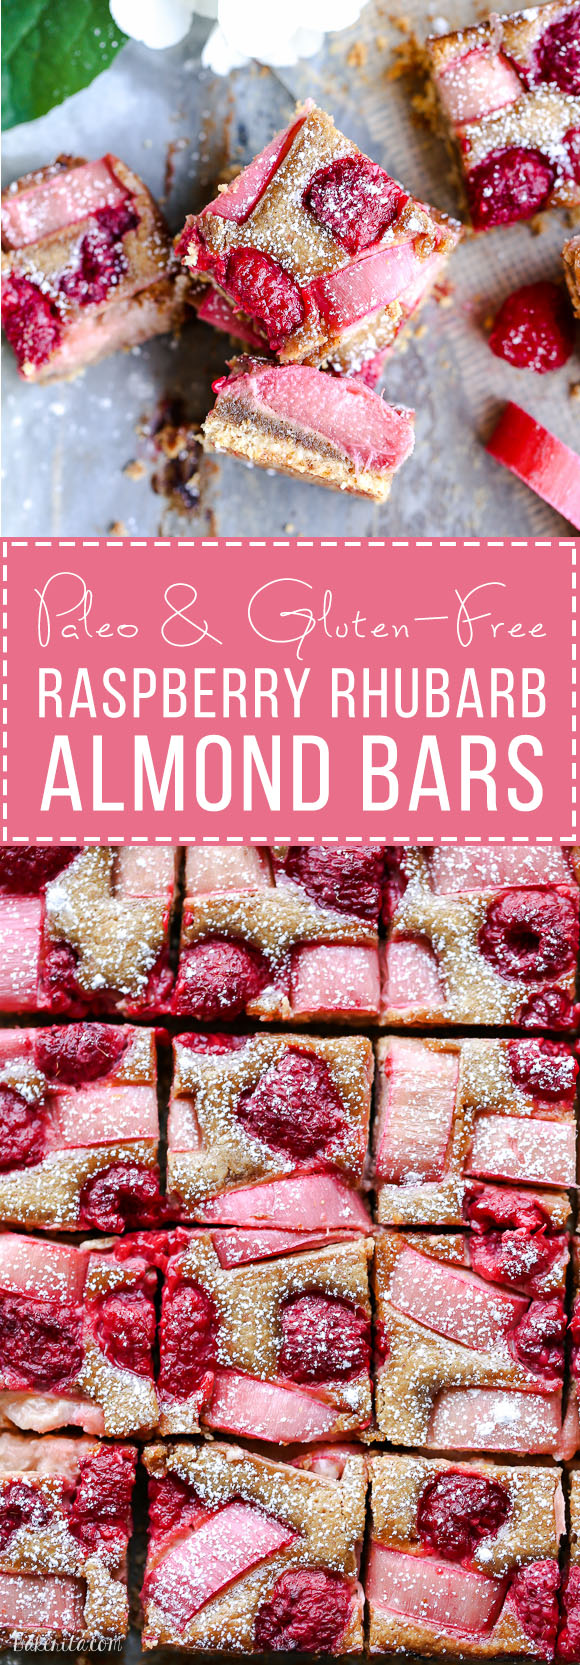 These Raspberry Rhubarb Almond Bars have an crisp almond-flour crust topped with soft almond frangipane, fresh raspberries, and tart rhubarb. This recipe is Paleo, gluten free + refined sugar free.